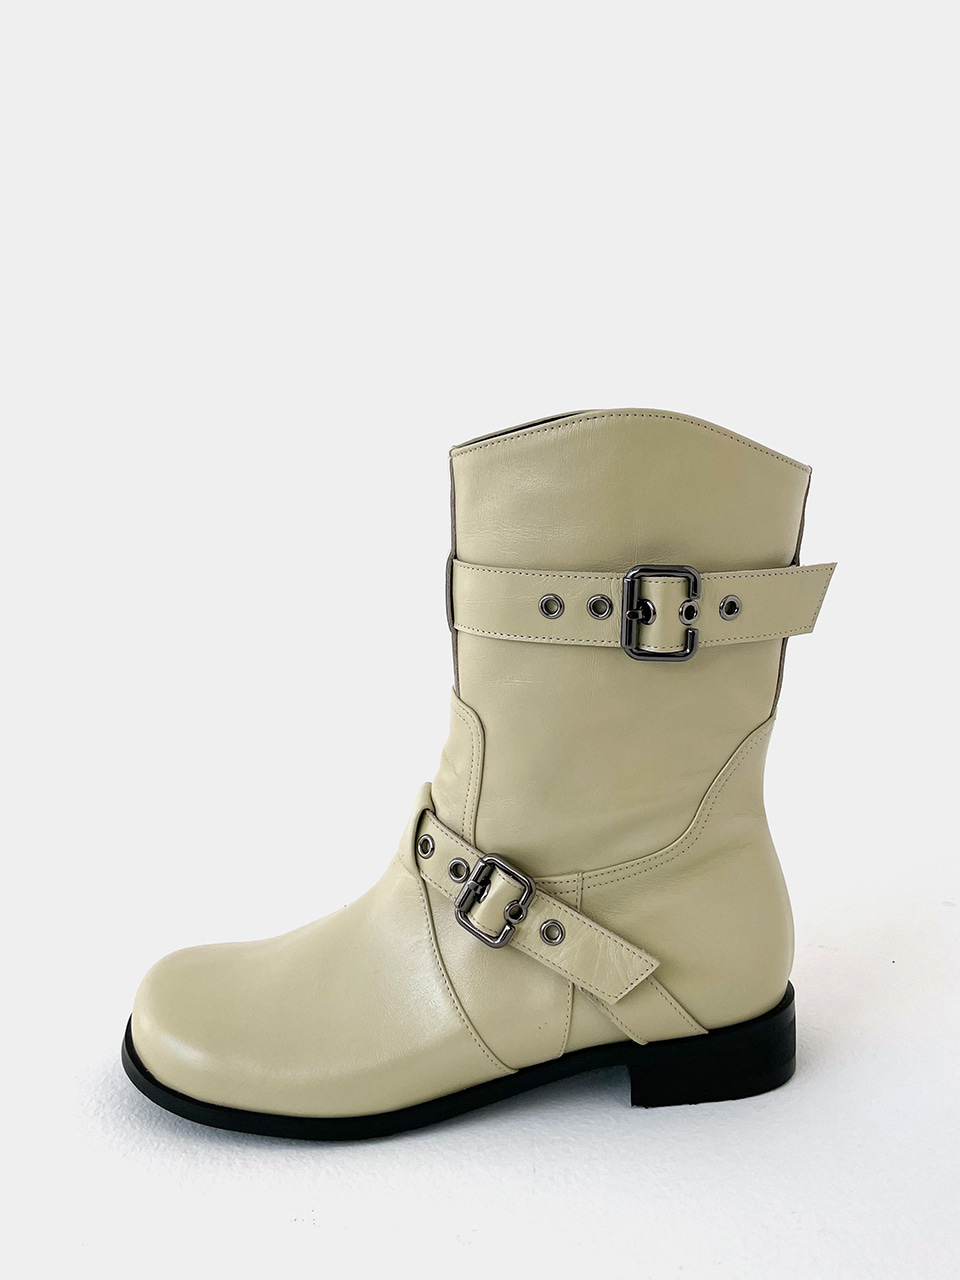 [Exclusive] Mrc092 Nickel Middle Boots (Yellowish-Cream)